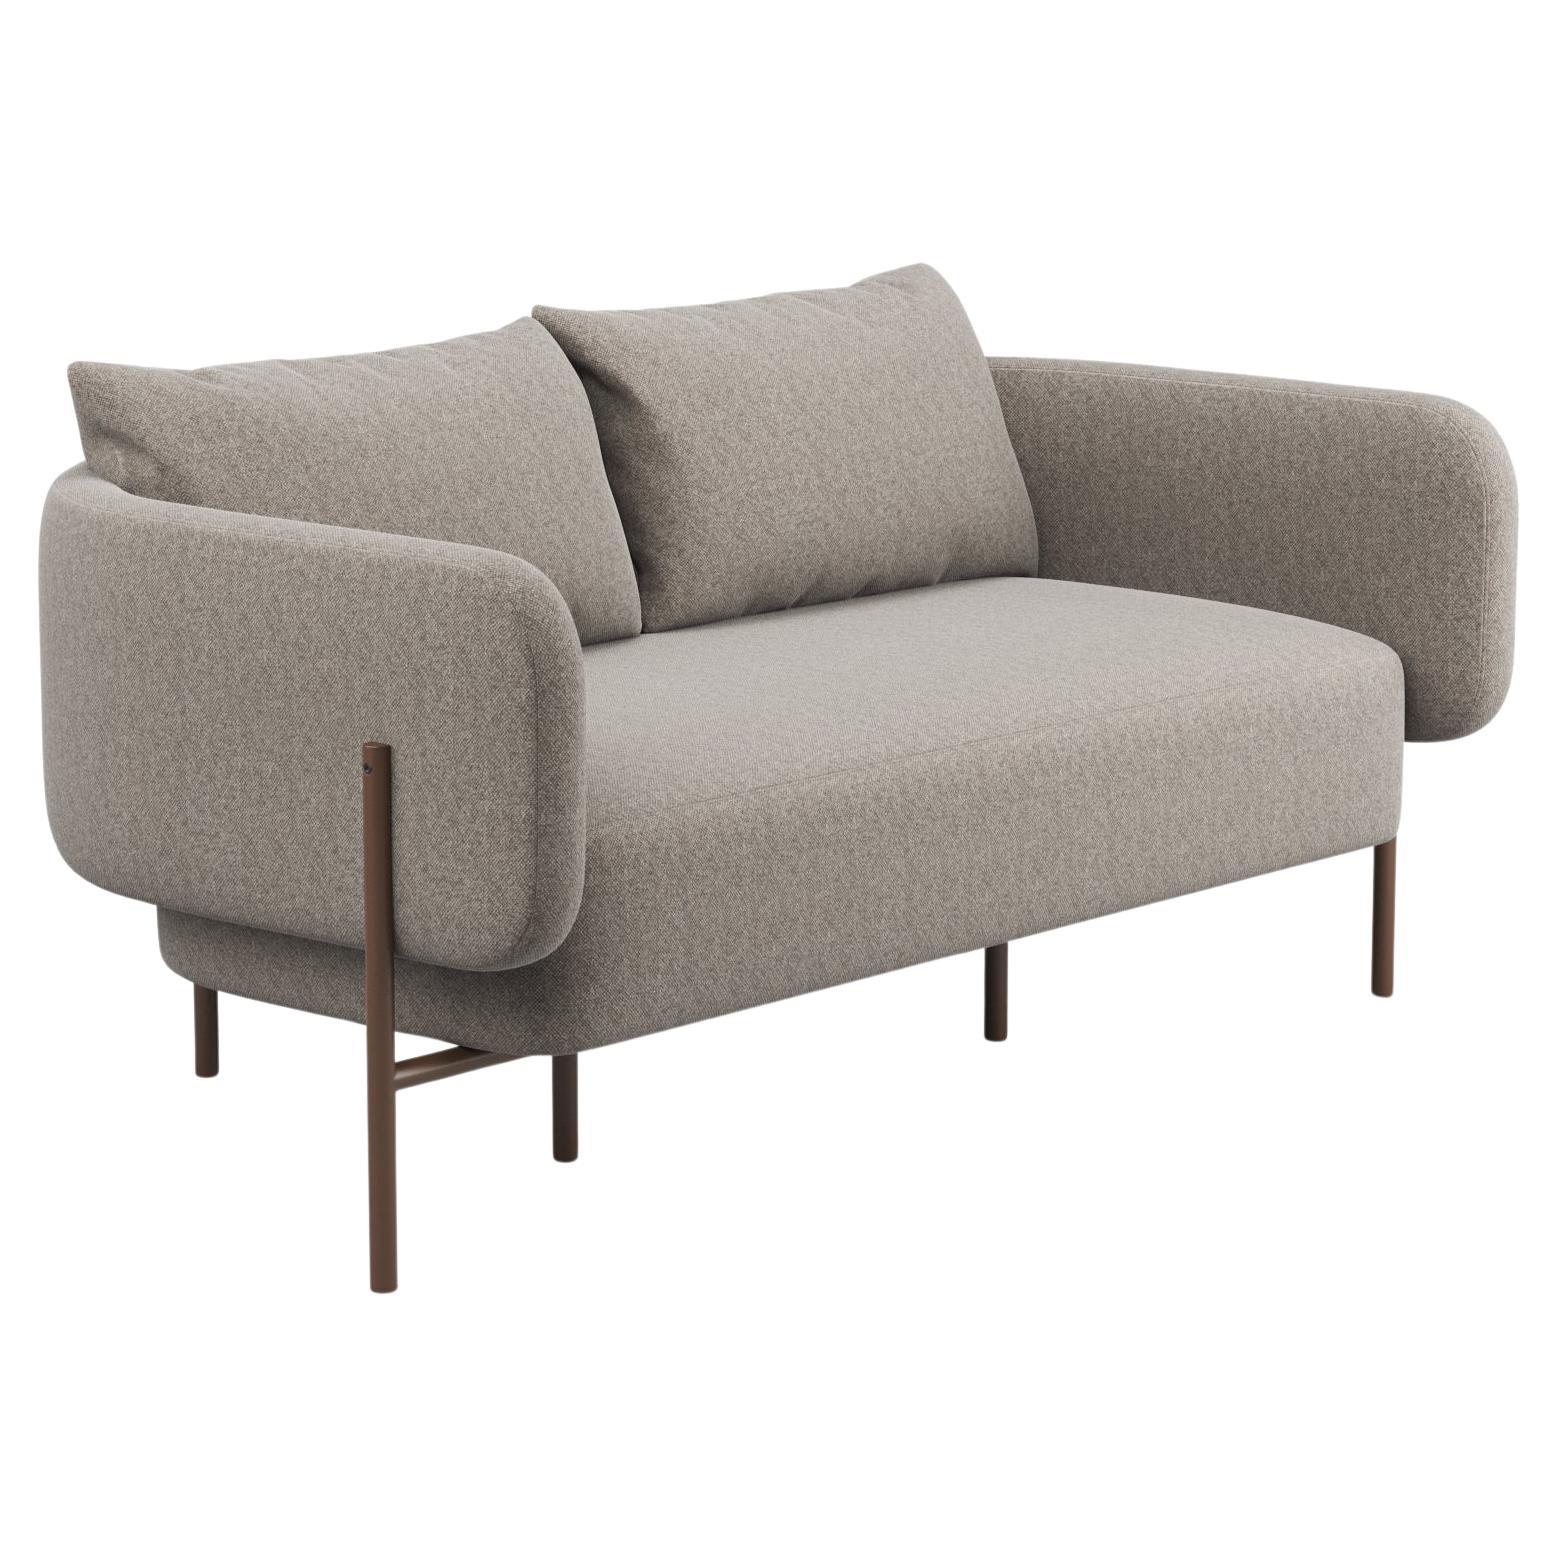 Hayche Abrazo 2 Seater Sofa - Brown, UK, Made to Order en vente